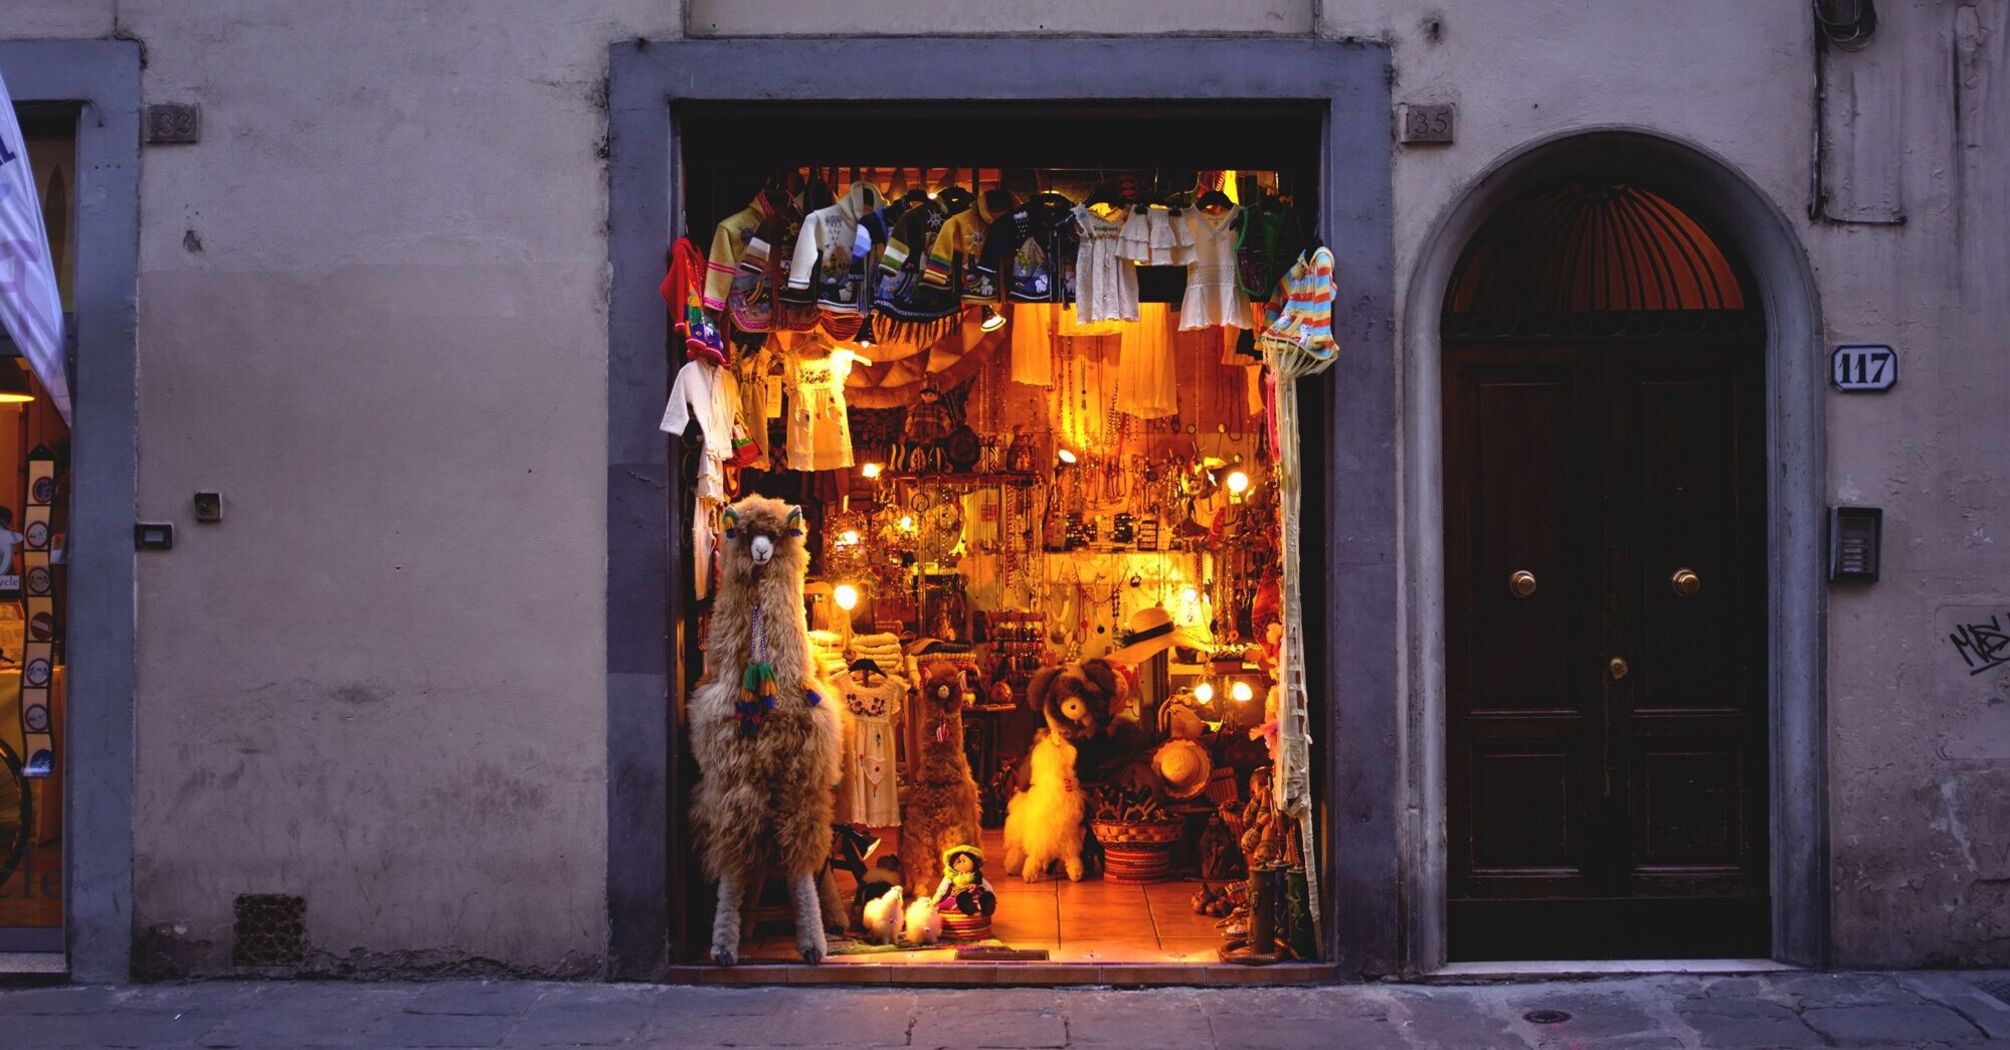 A souvenir shop filled with colorful folk art items